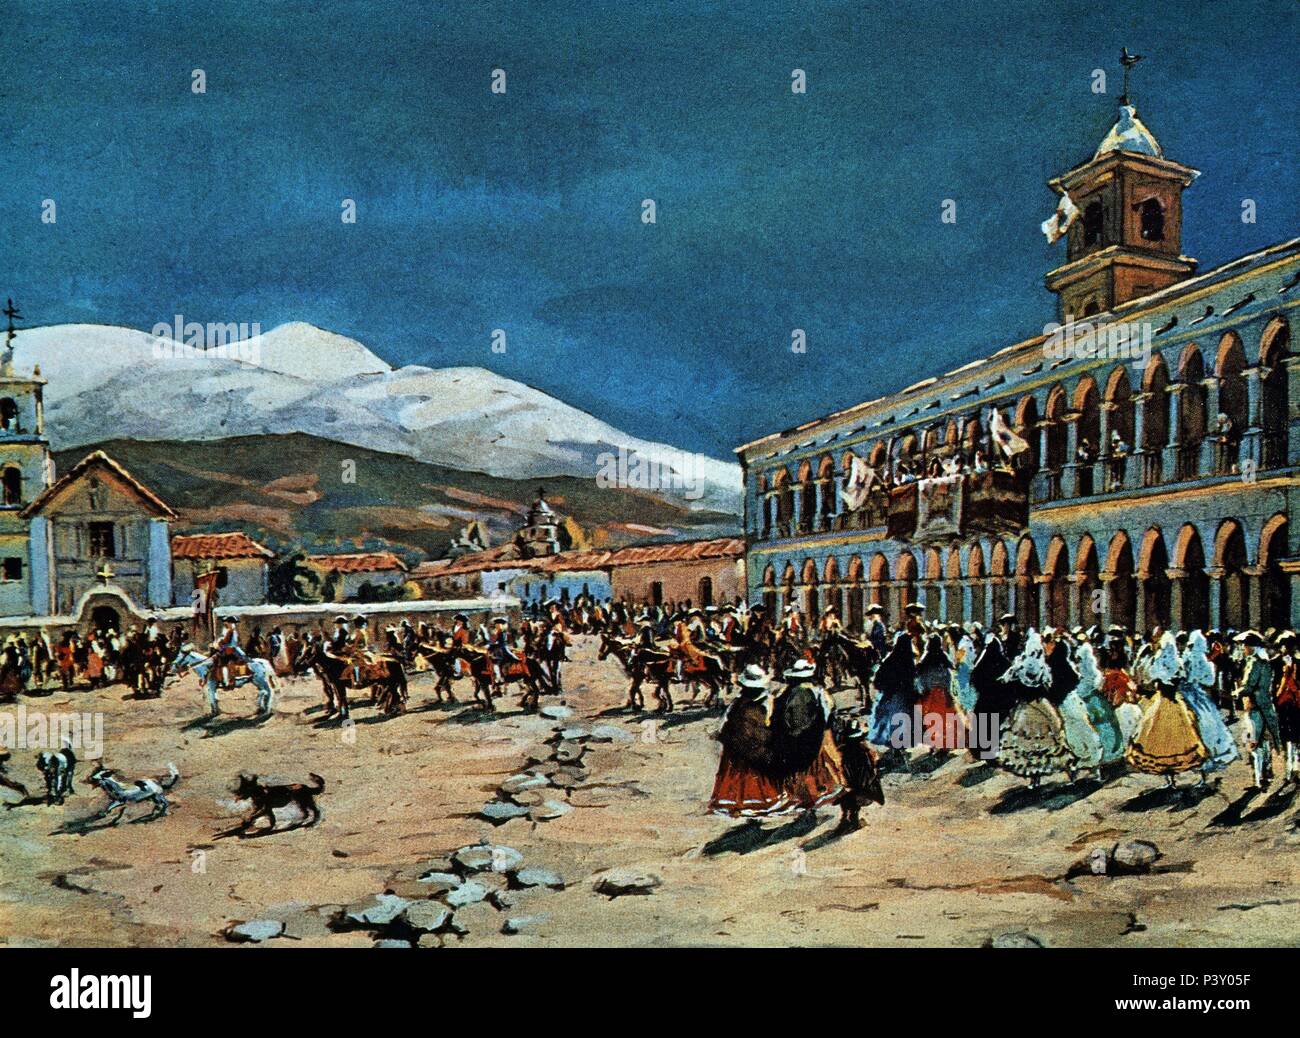 PASEO DEL PENDON REAL EN JUJUY - ARGENTINA - 1800 - GUACHE. Author: MATATS LEORICE. Location: MUSEO DE AMERICA-COLECCION, MADRID, SPAIN. Stock Photo